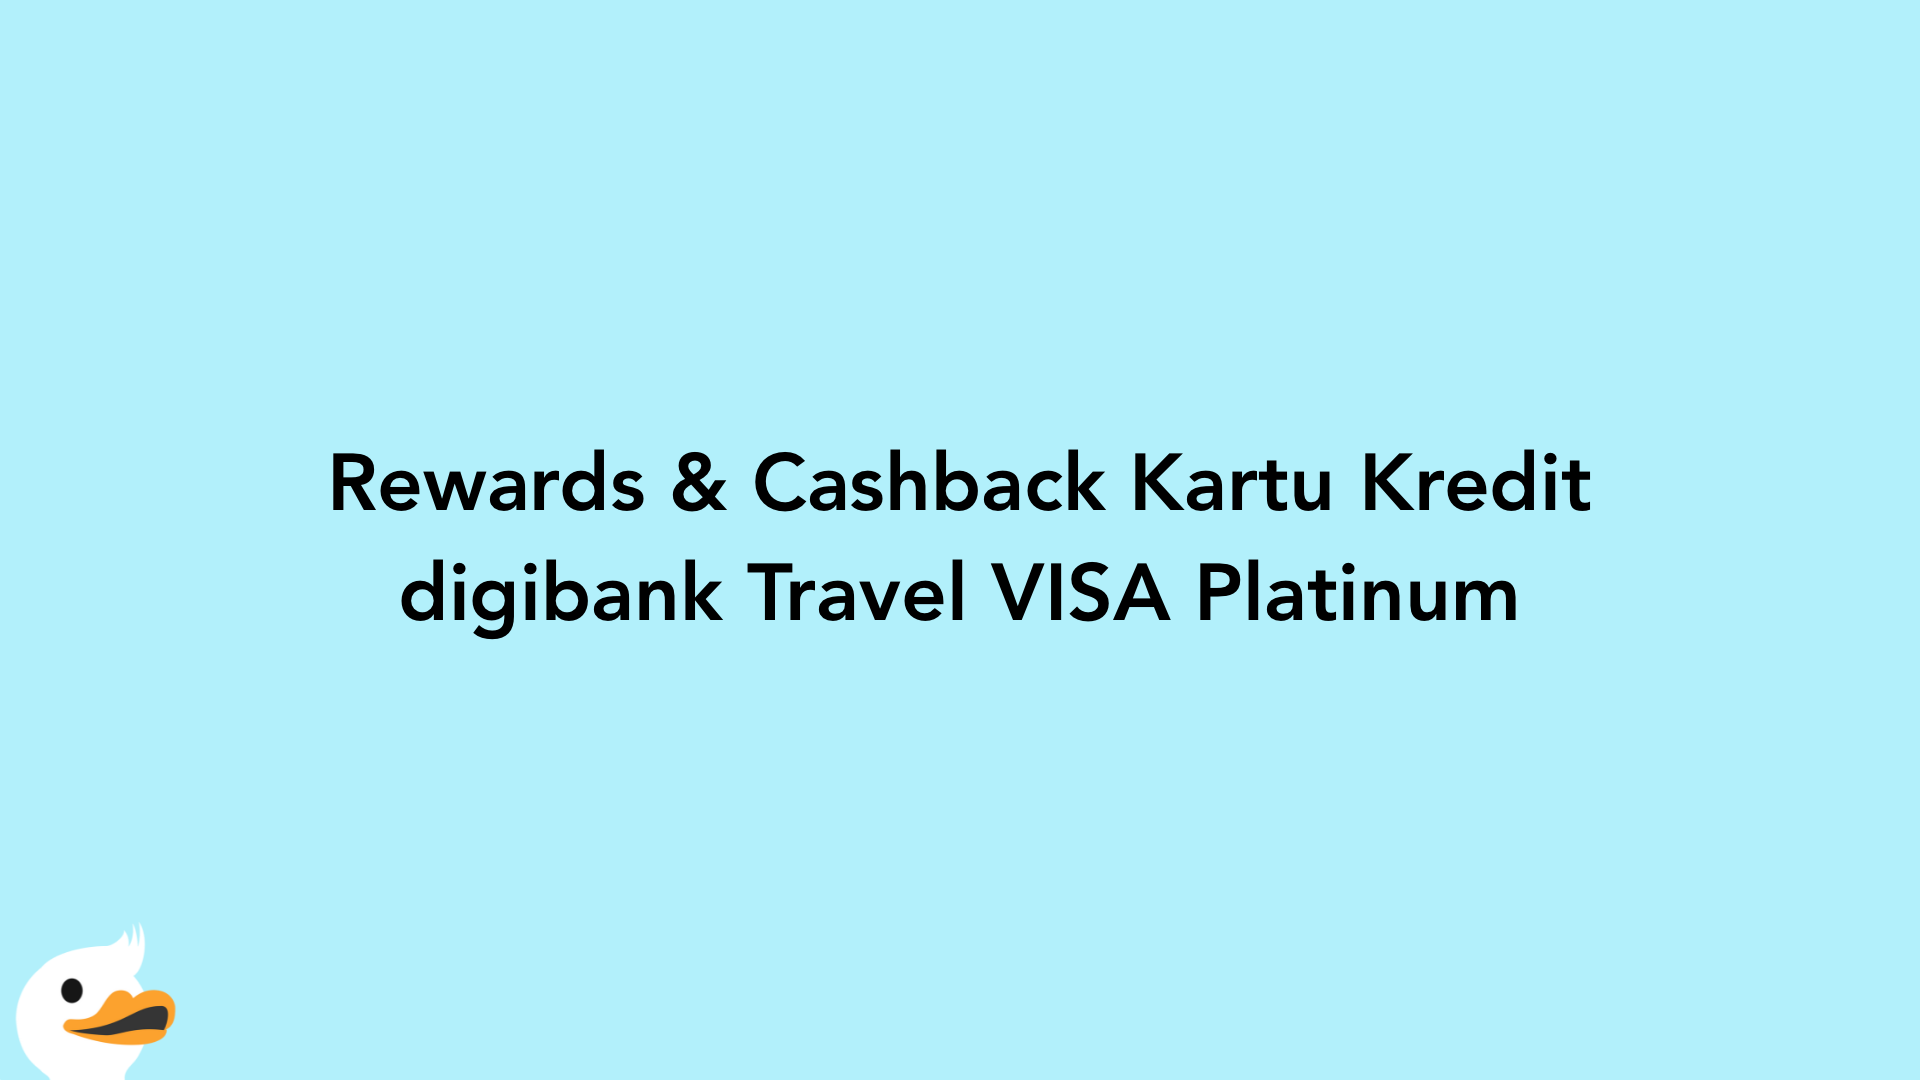 Rewards & Cashback Kartu Kredit digibank Travel VISA Platinum